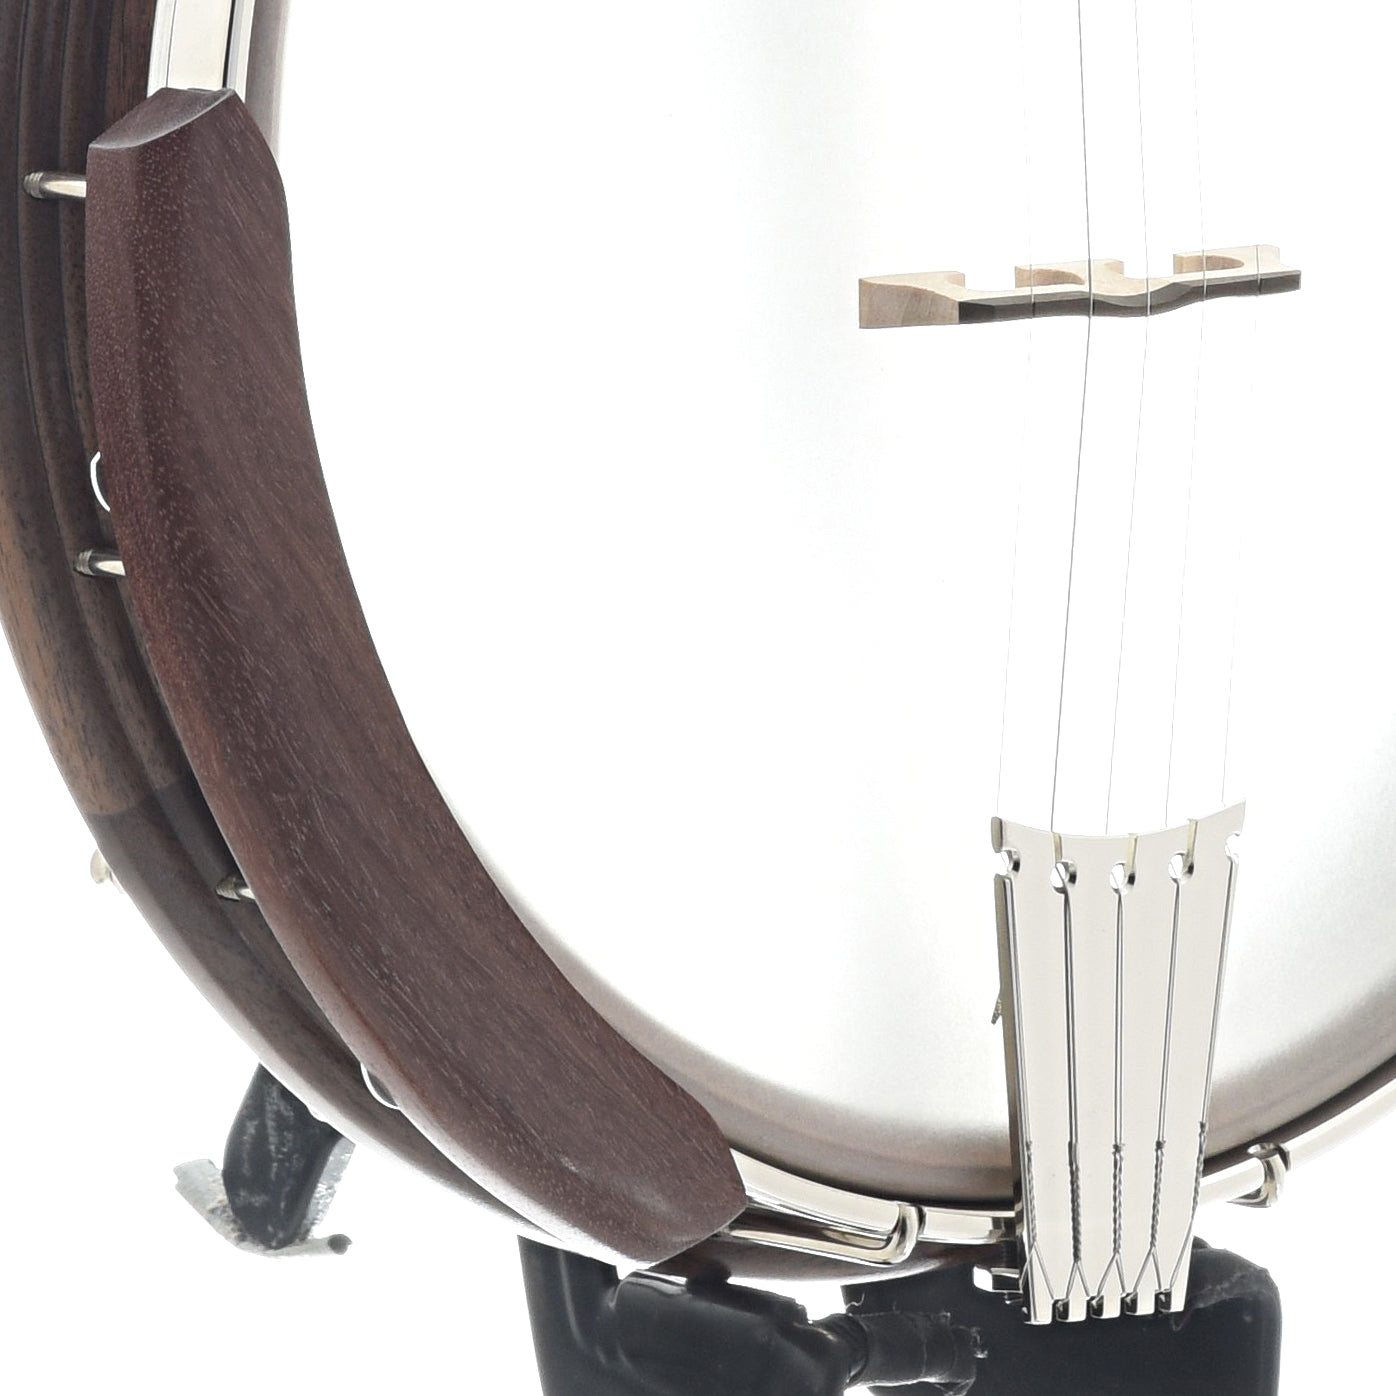 Image 5 of Nechville Atlas Deluxe Openback Banjo & Case - SKU# NATLASDLX : Product Type Open Back Banjos : Elderly Instruments